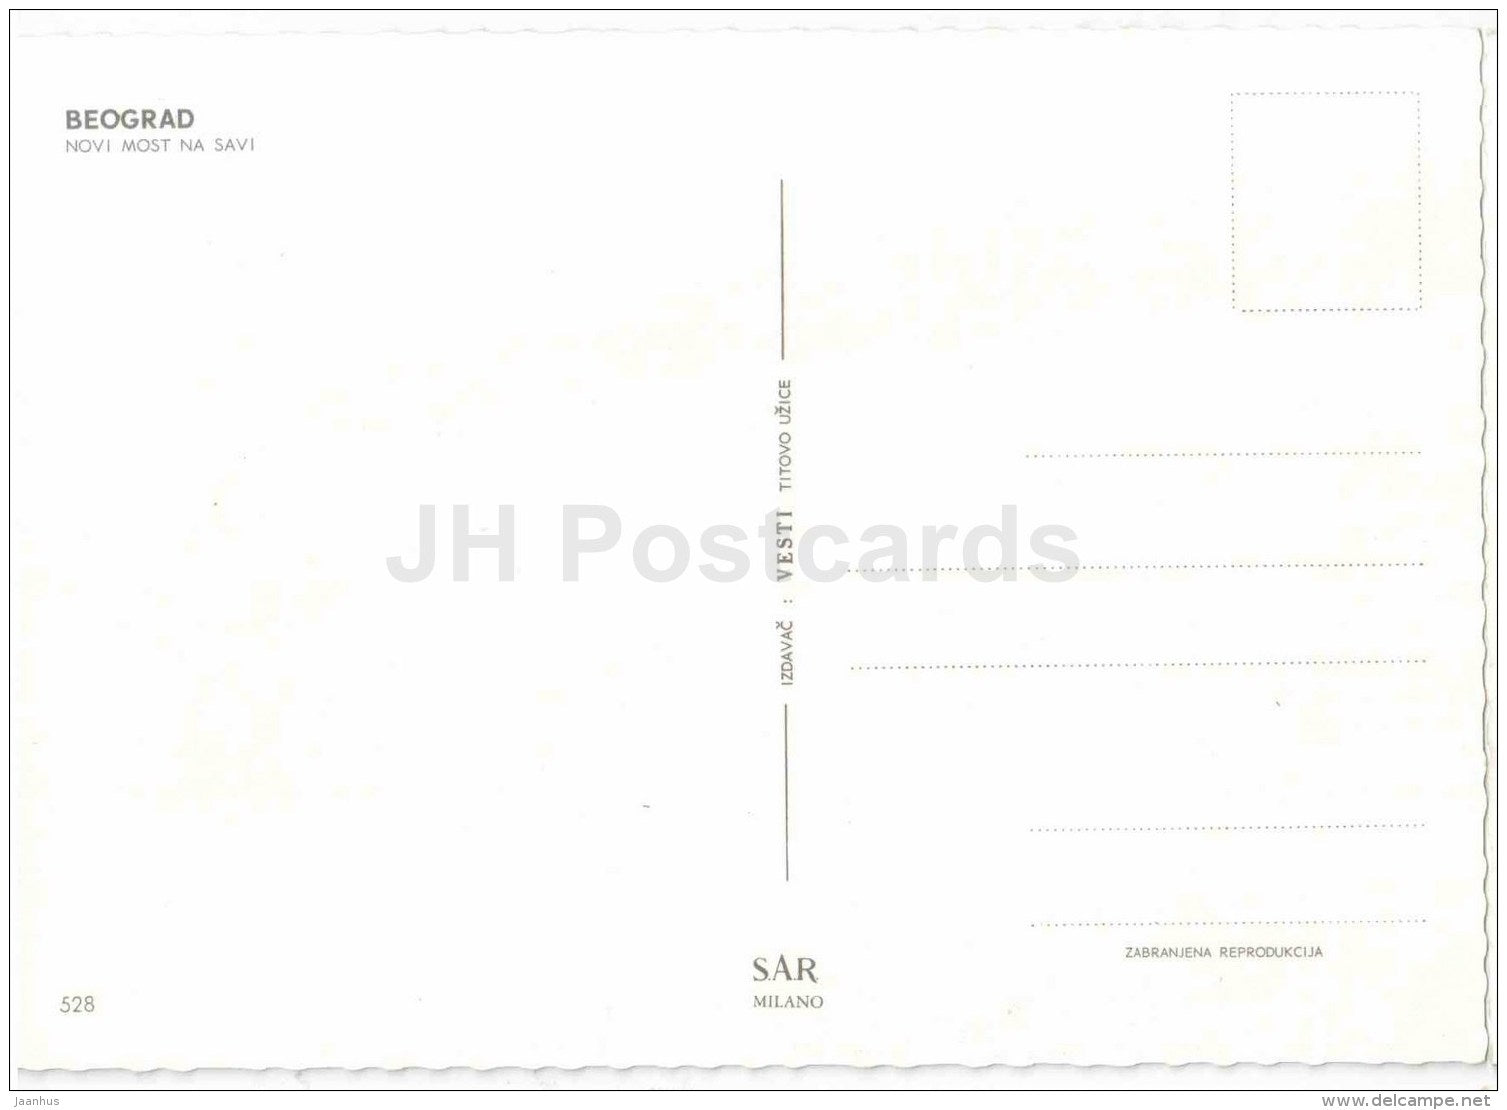 bridge - boat - Belgrade - Beograd - 528 - Serbia - Yugoslavia - unused - JH Postcards